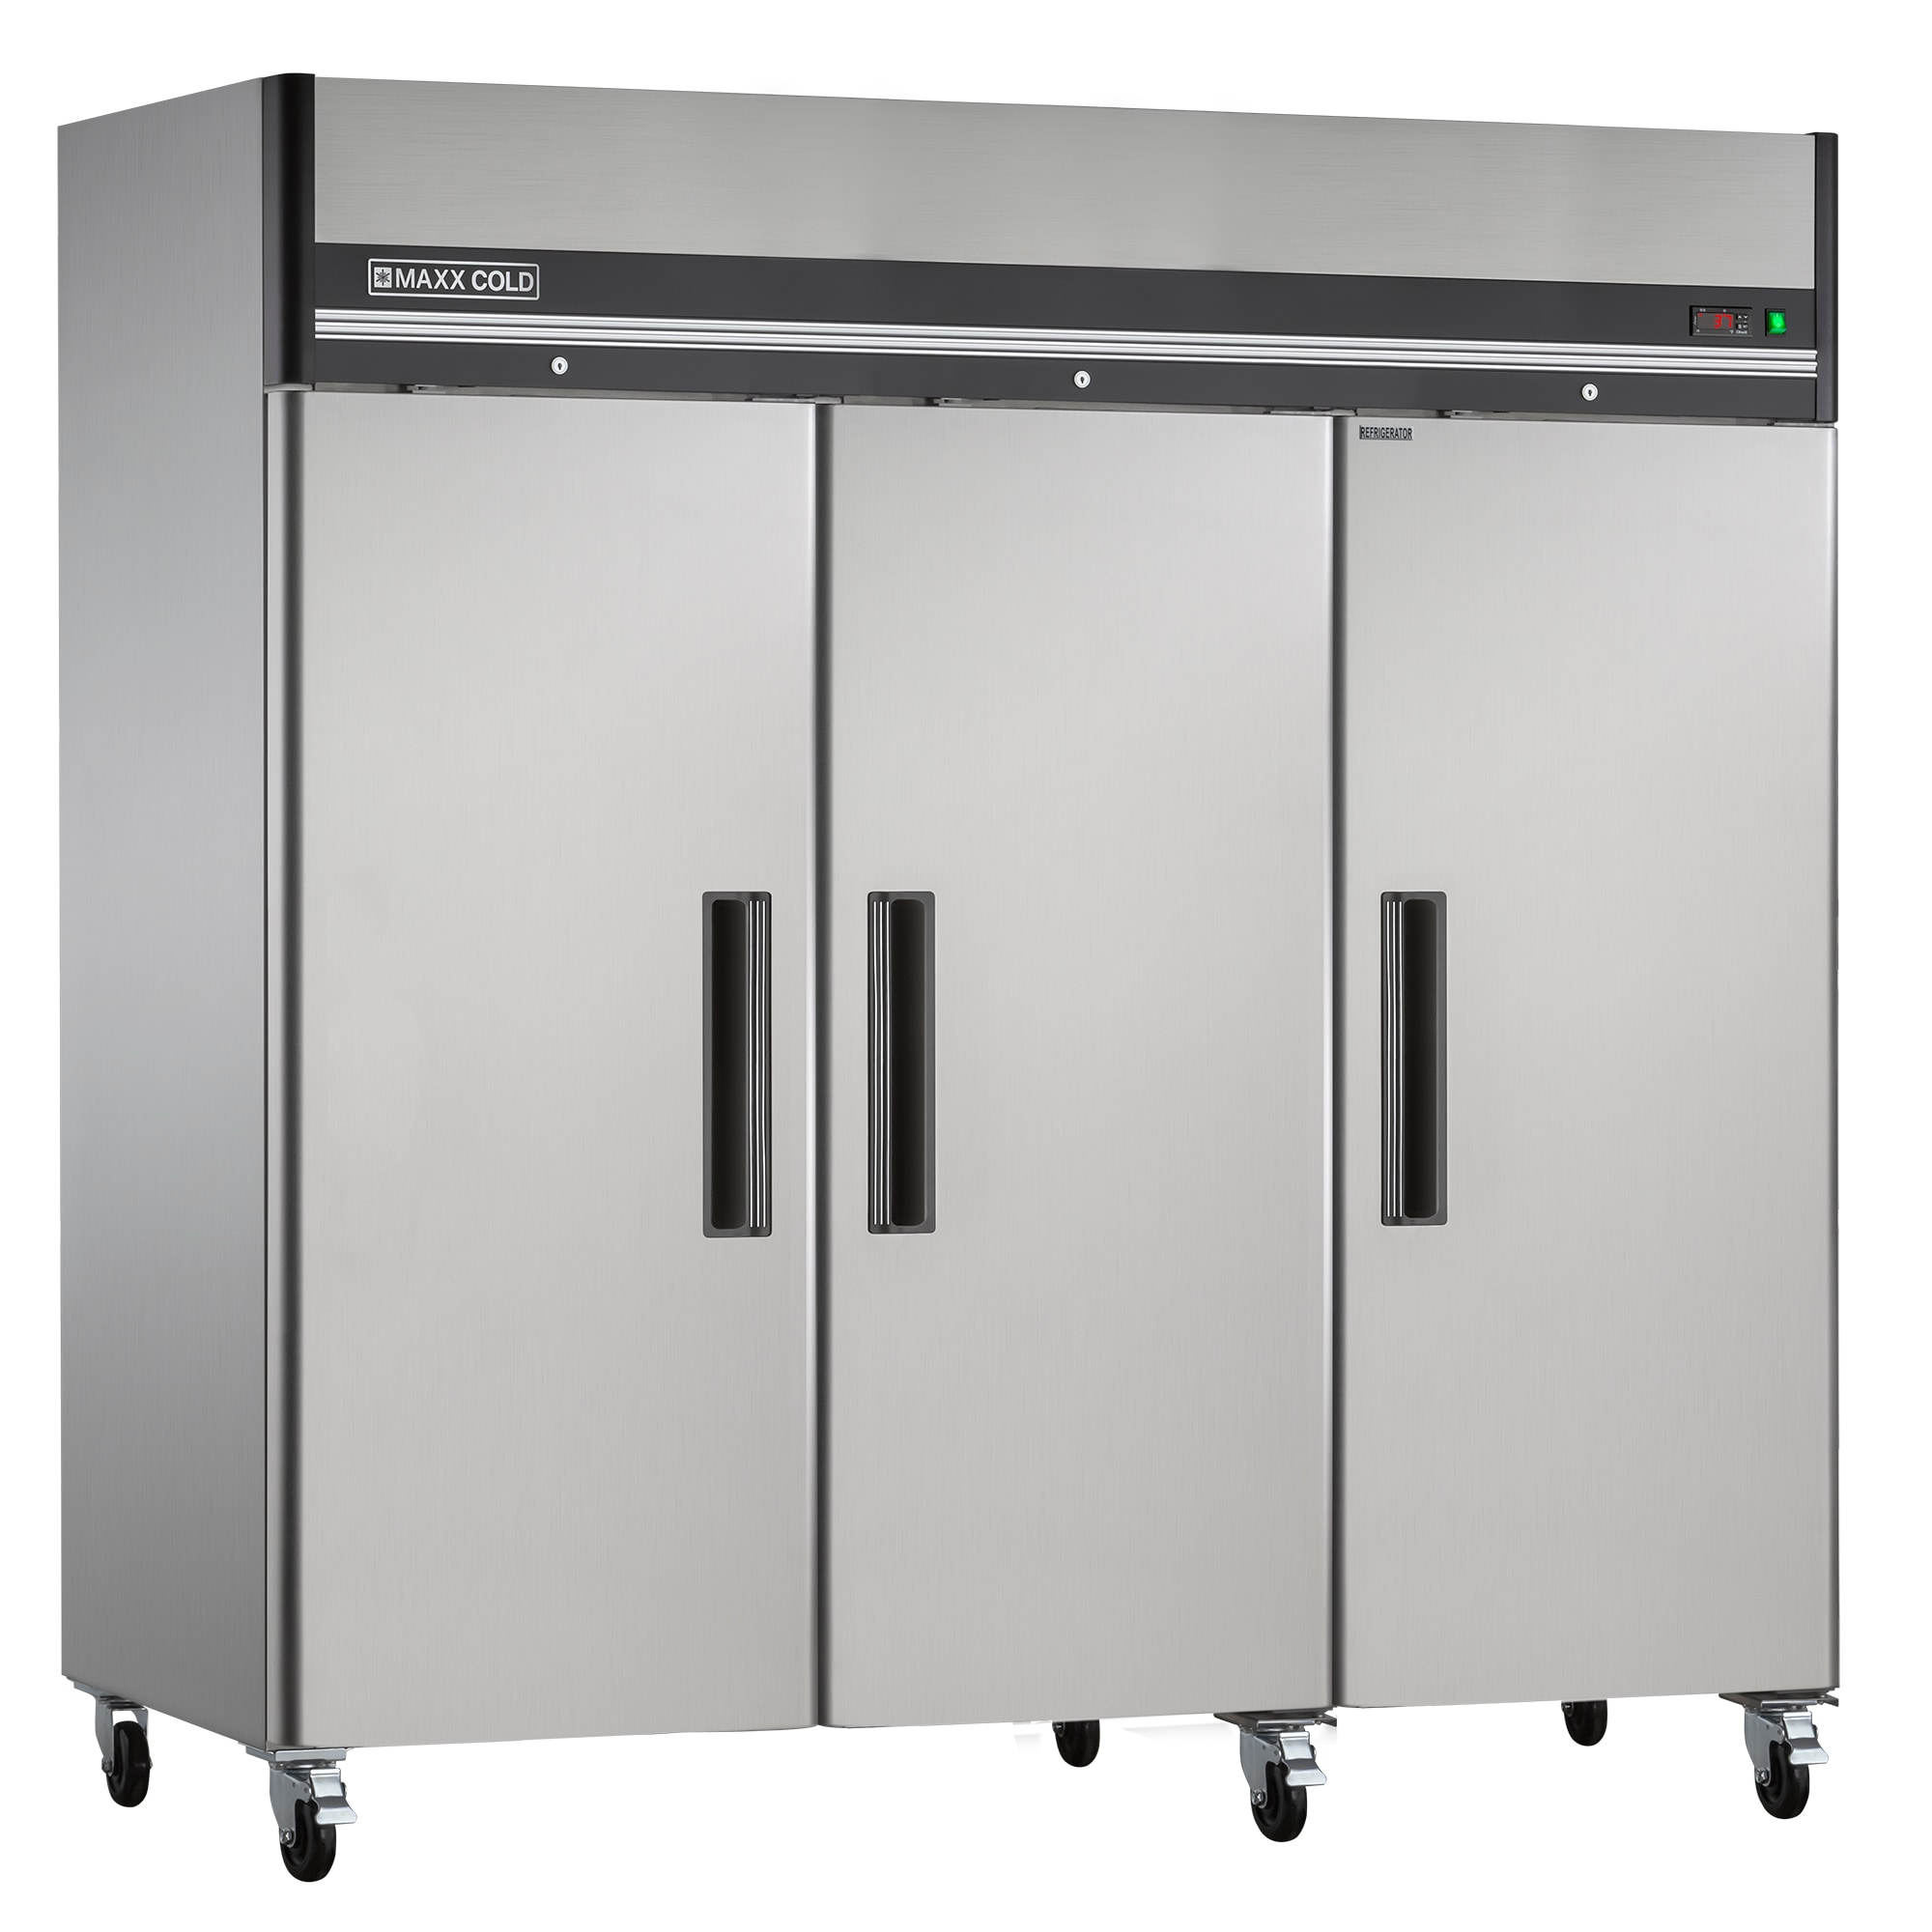  Xiltek All New 3 Door Commercial Reach In Stainless Steel  Refrigerator - Restaurant Kitchen Fridge : Industrial & Scientific